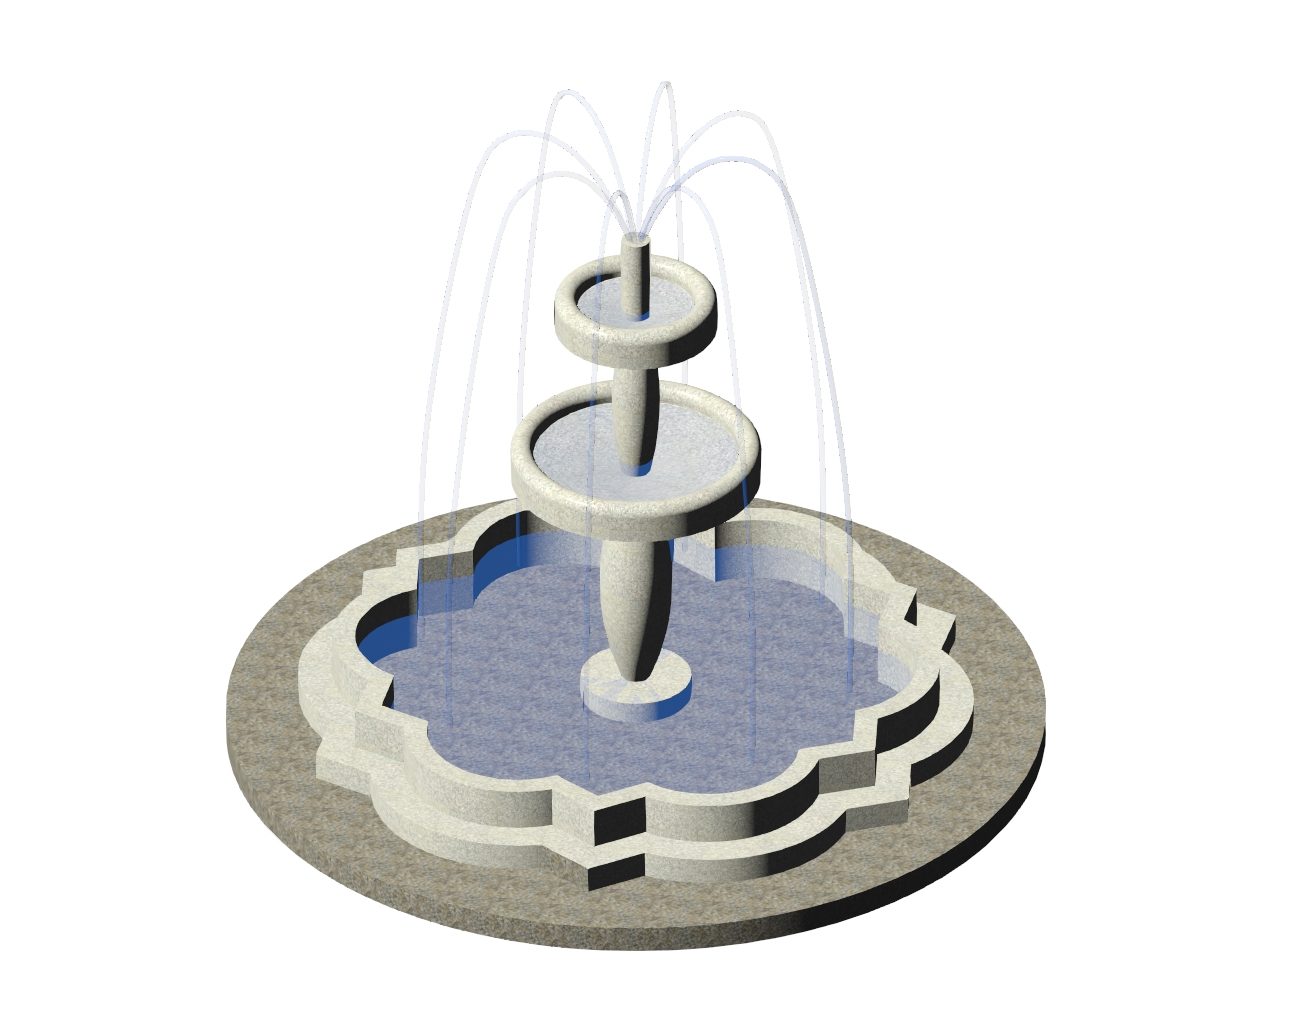 3-dimensional water fountain